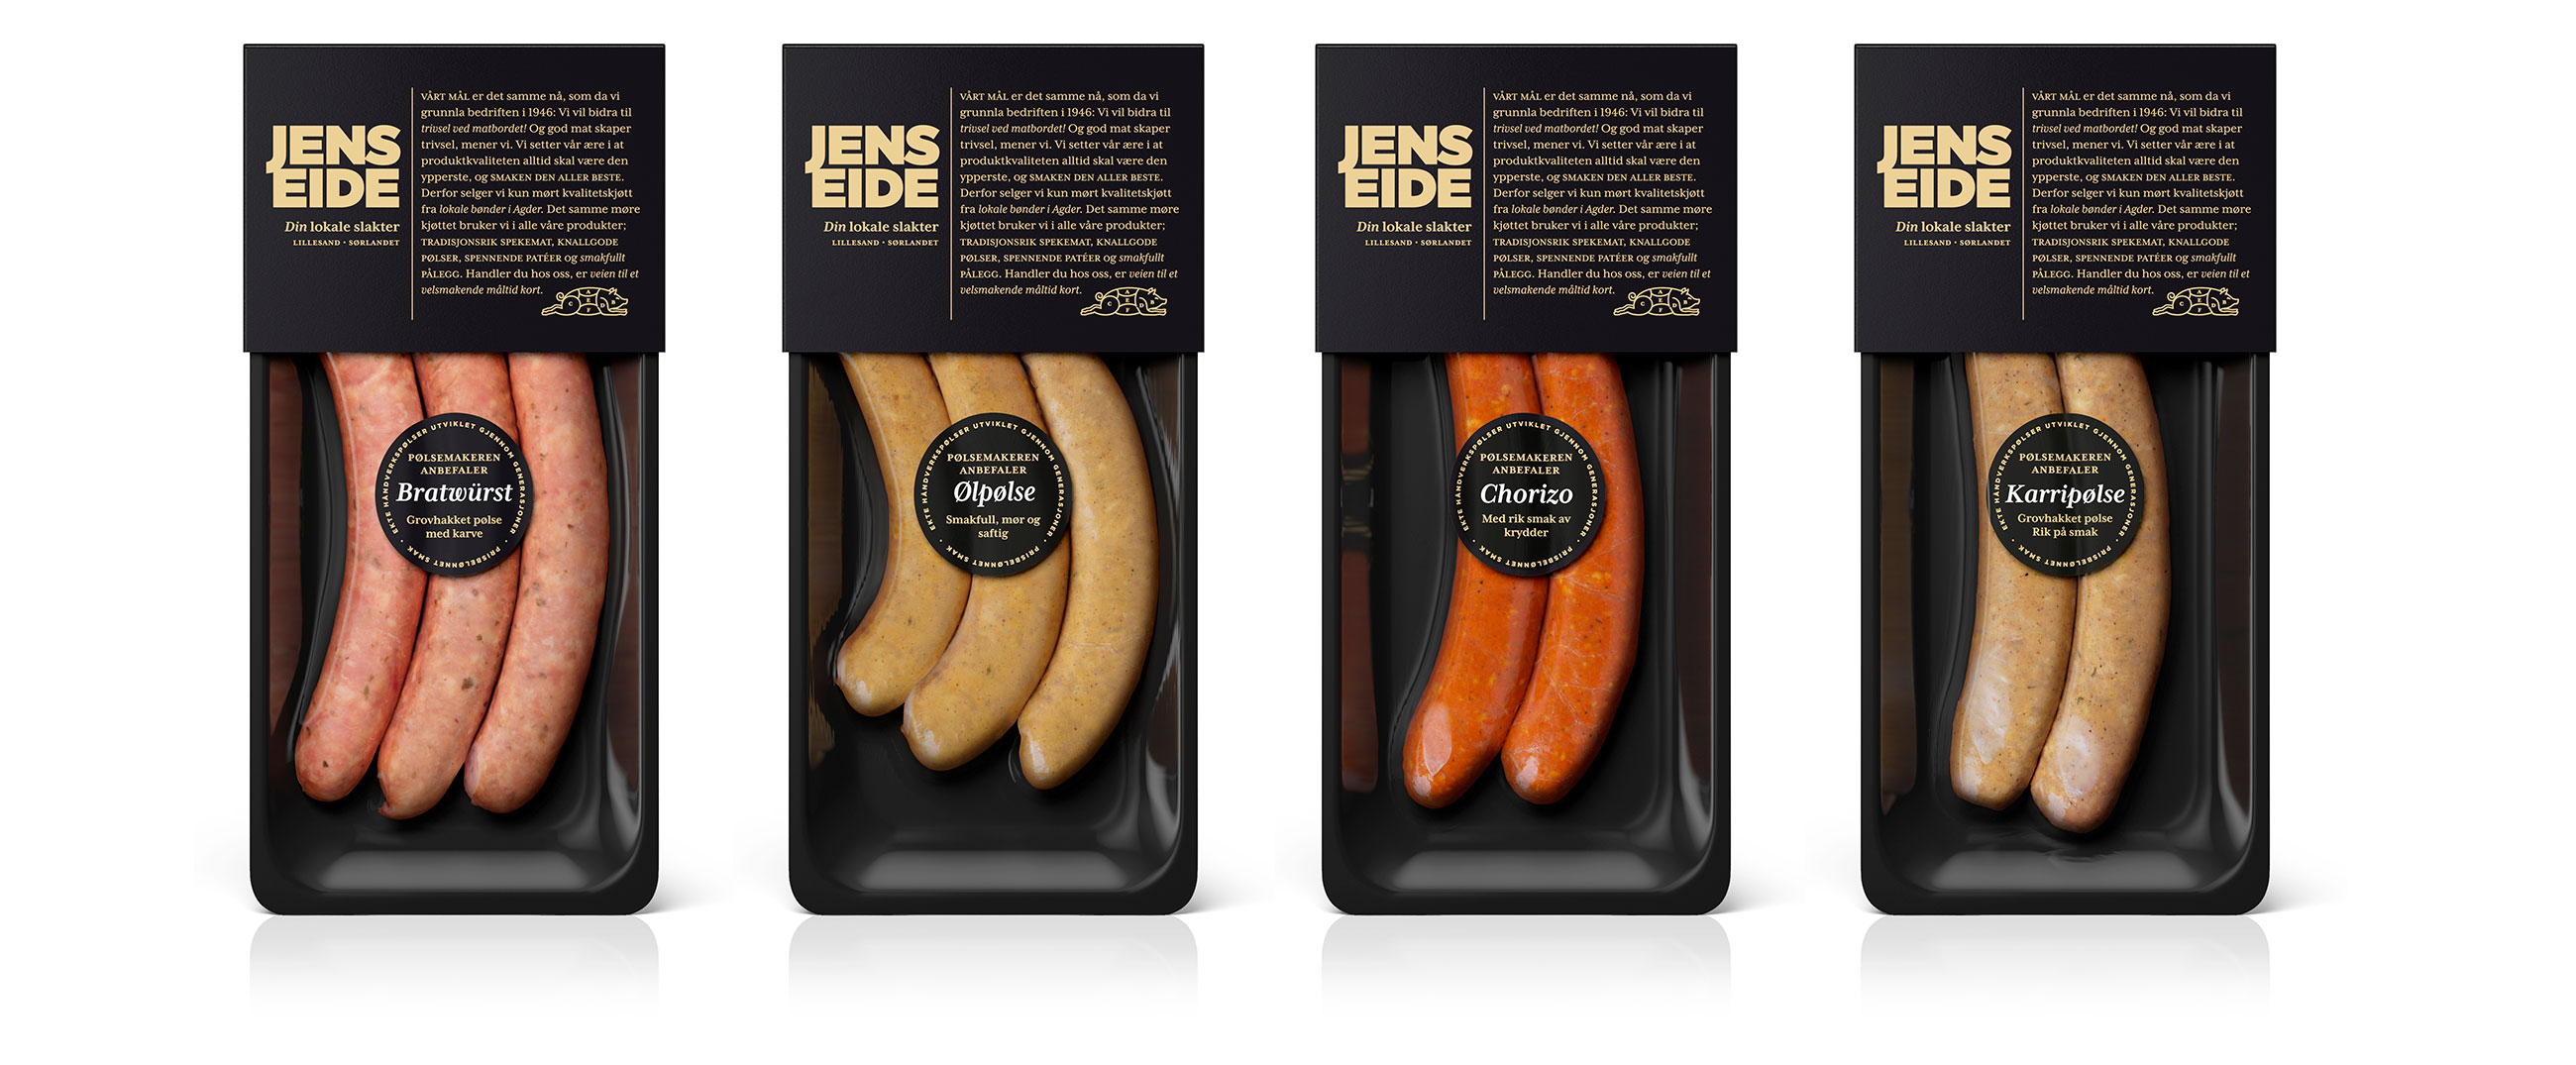 Jens Eide slakter butcher pølser sausages, bratwürst, ølpølse, chorizo, karripølse. Emballasje packaging design.